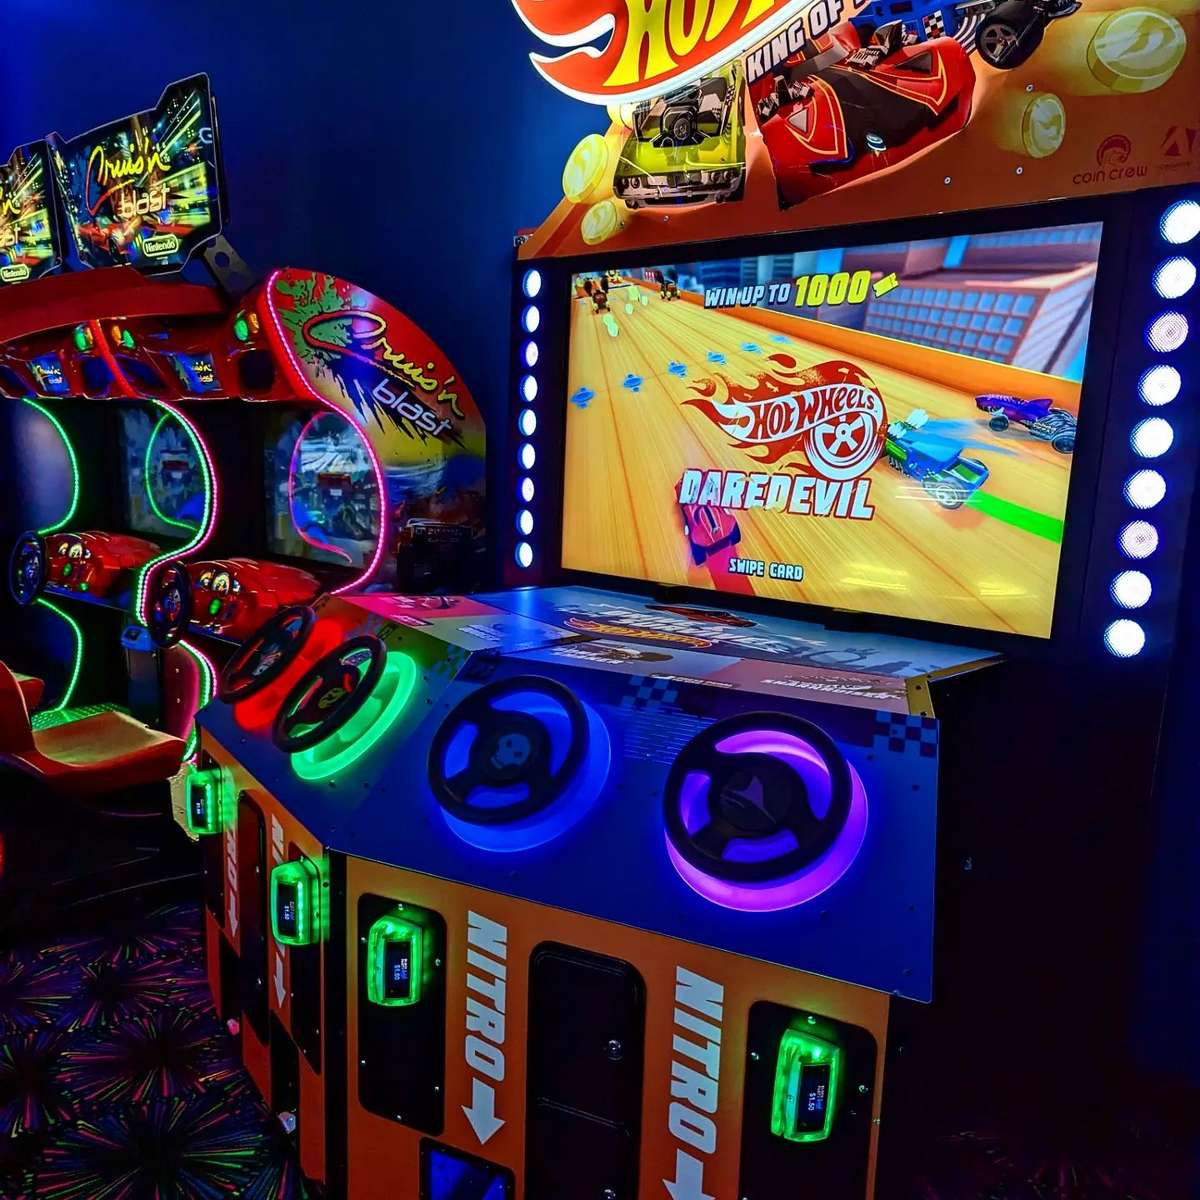 Hot wheels arcade game